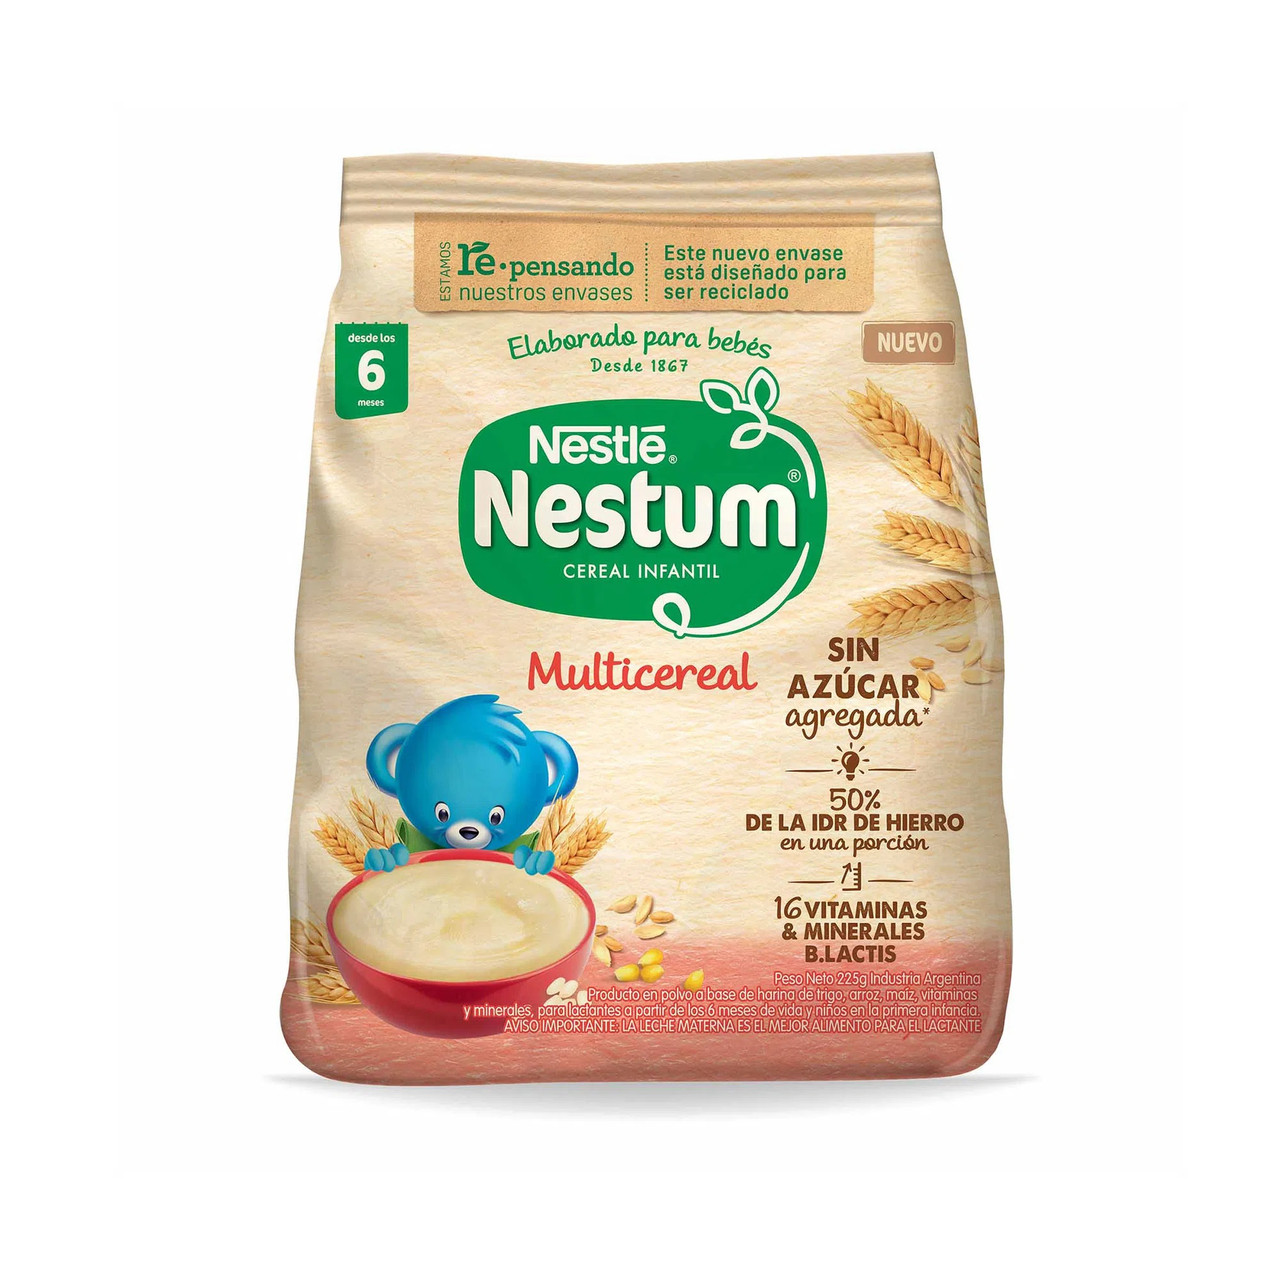 Nestle Cerelac Wheat Cereal 400g - Royac Shop